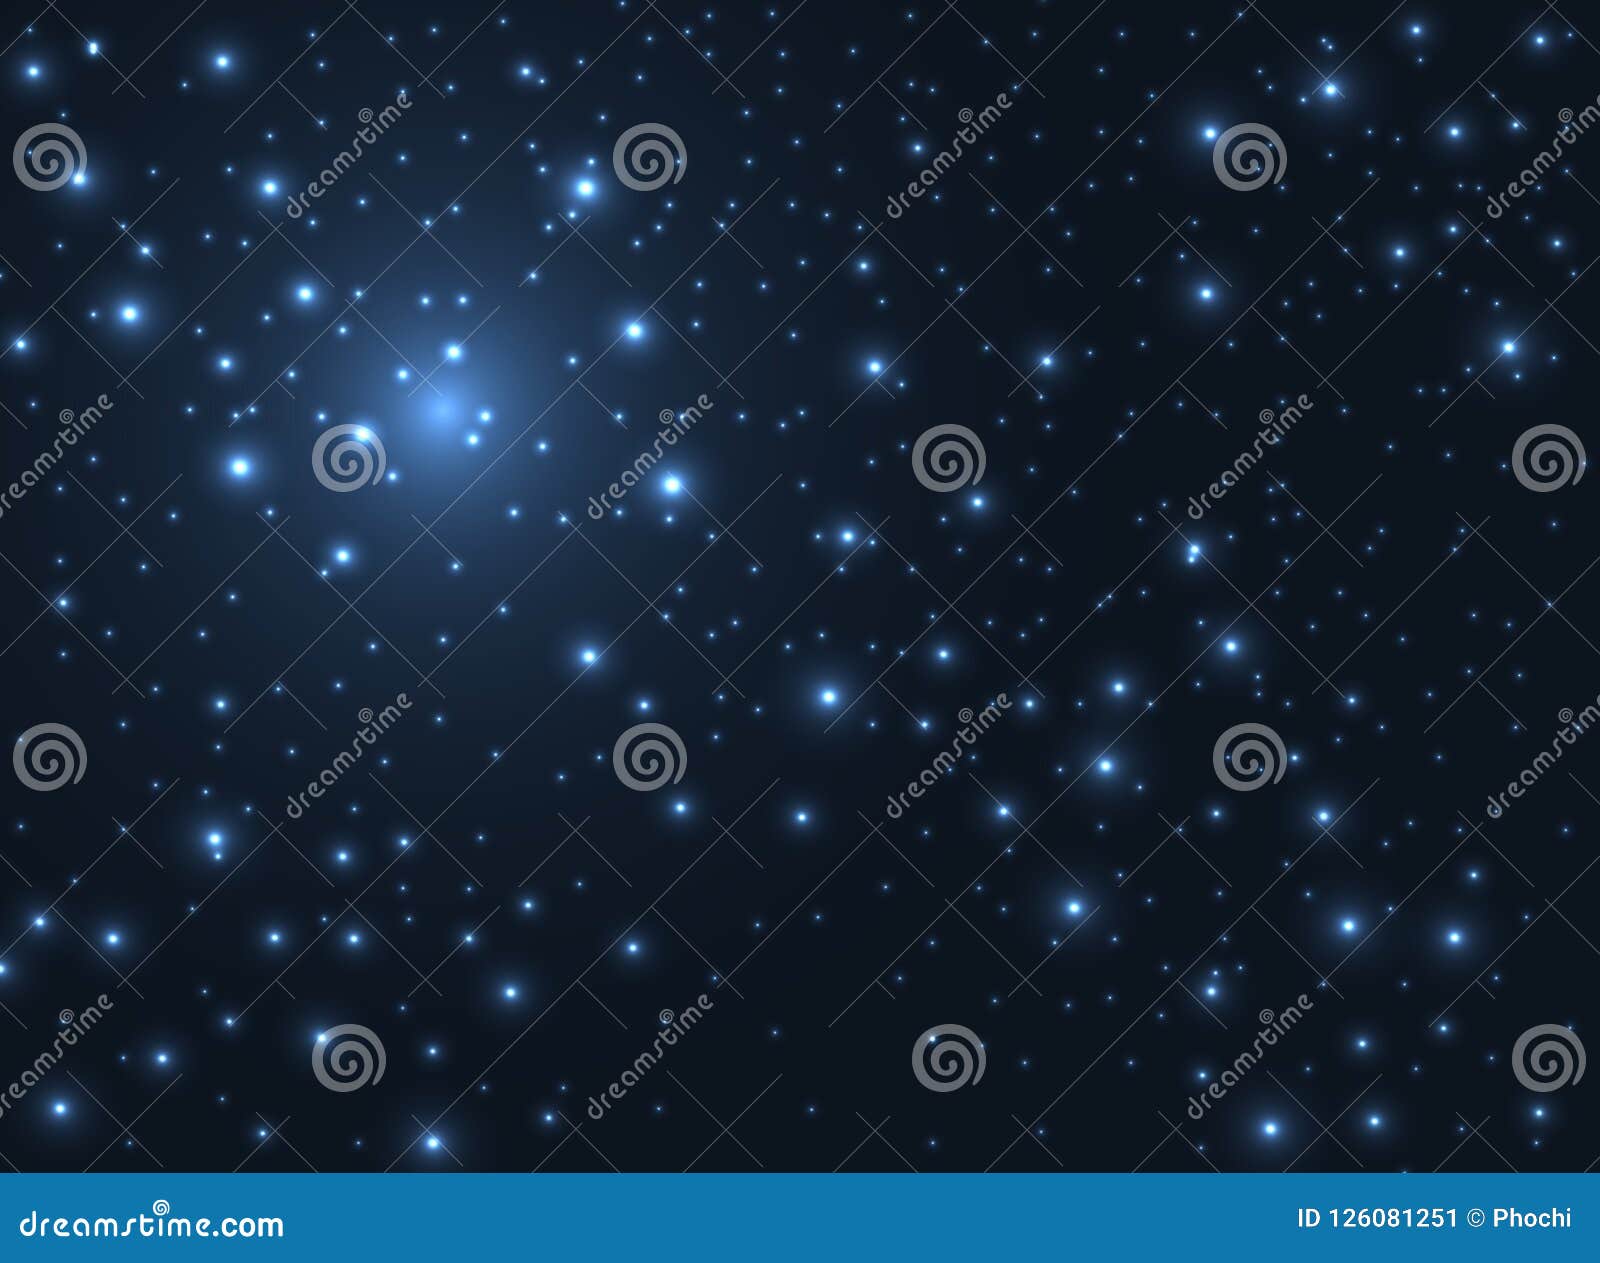 Shining stars glow in the dark sky background Vector Image